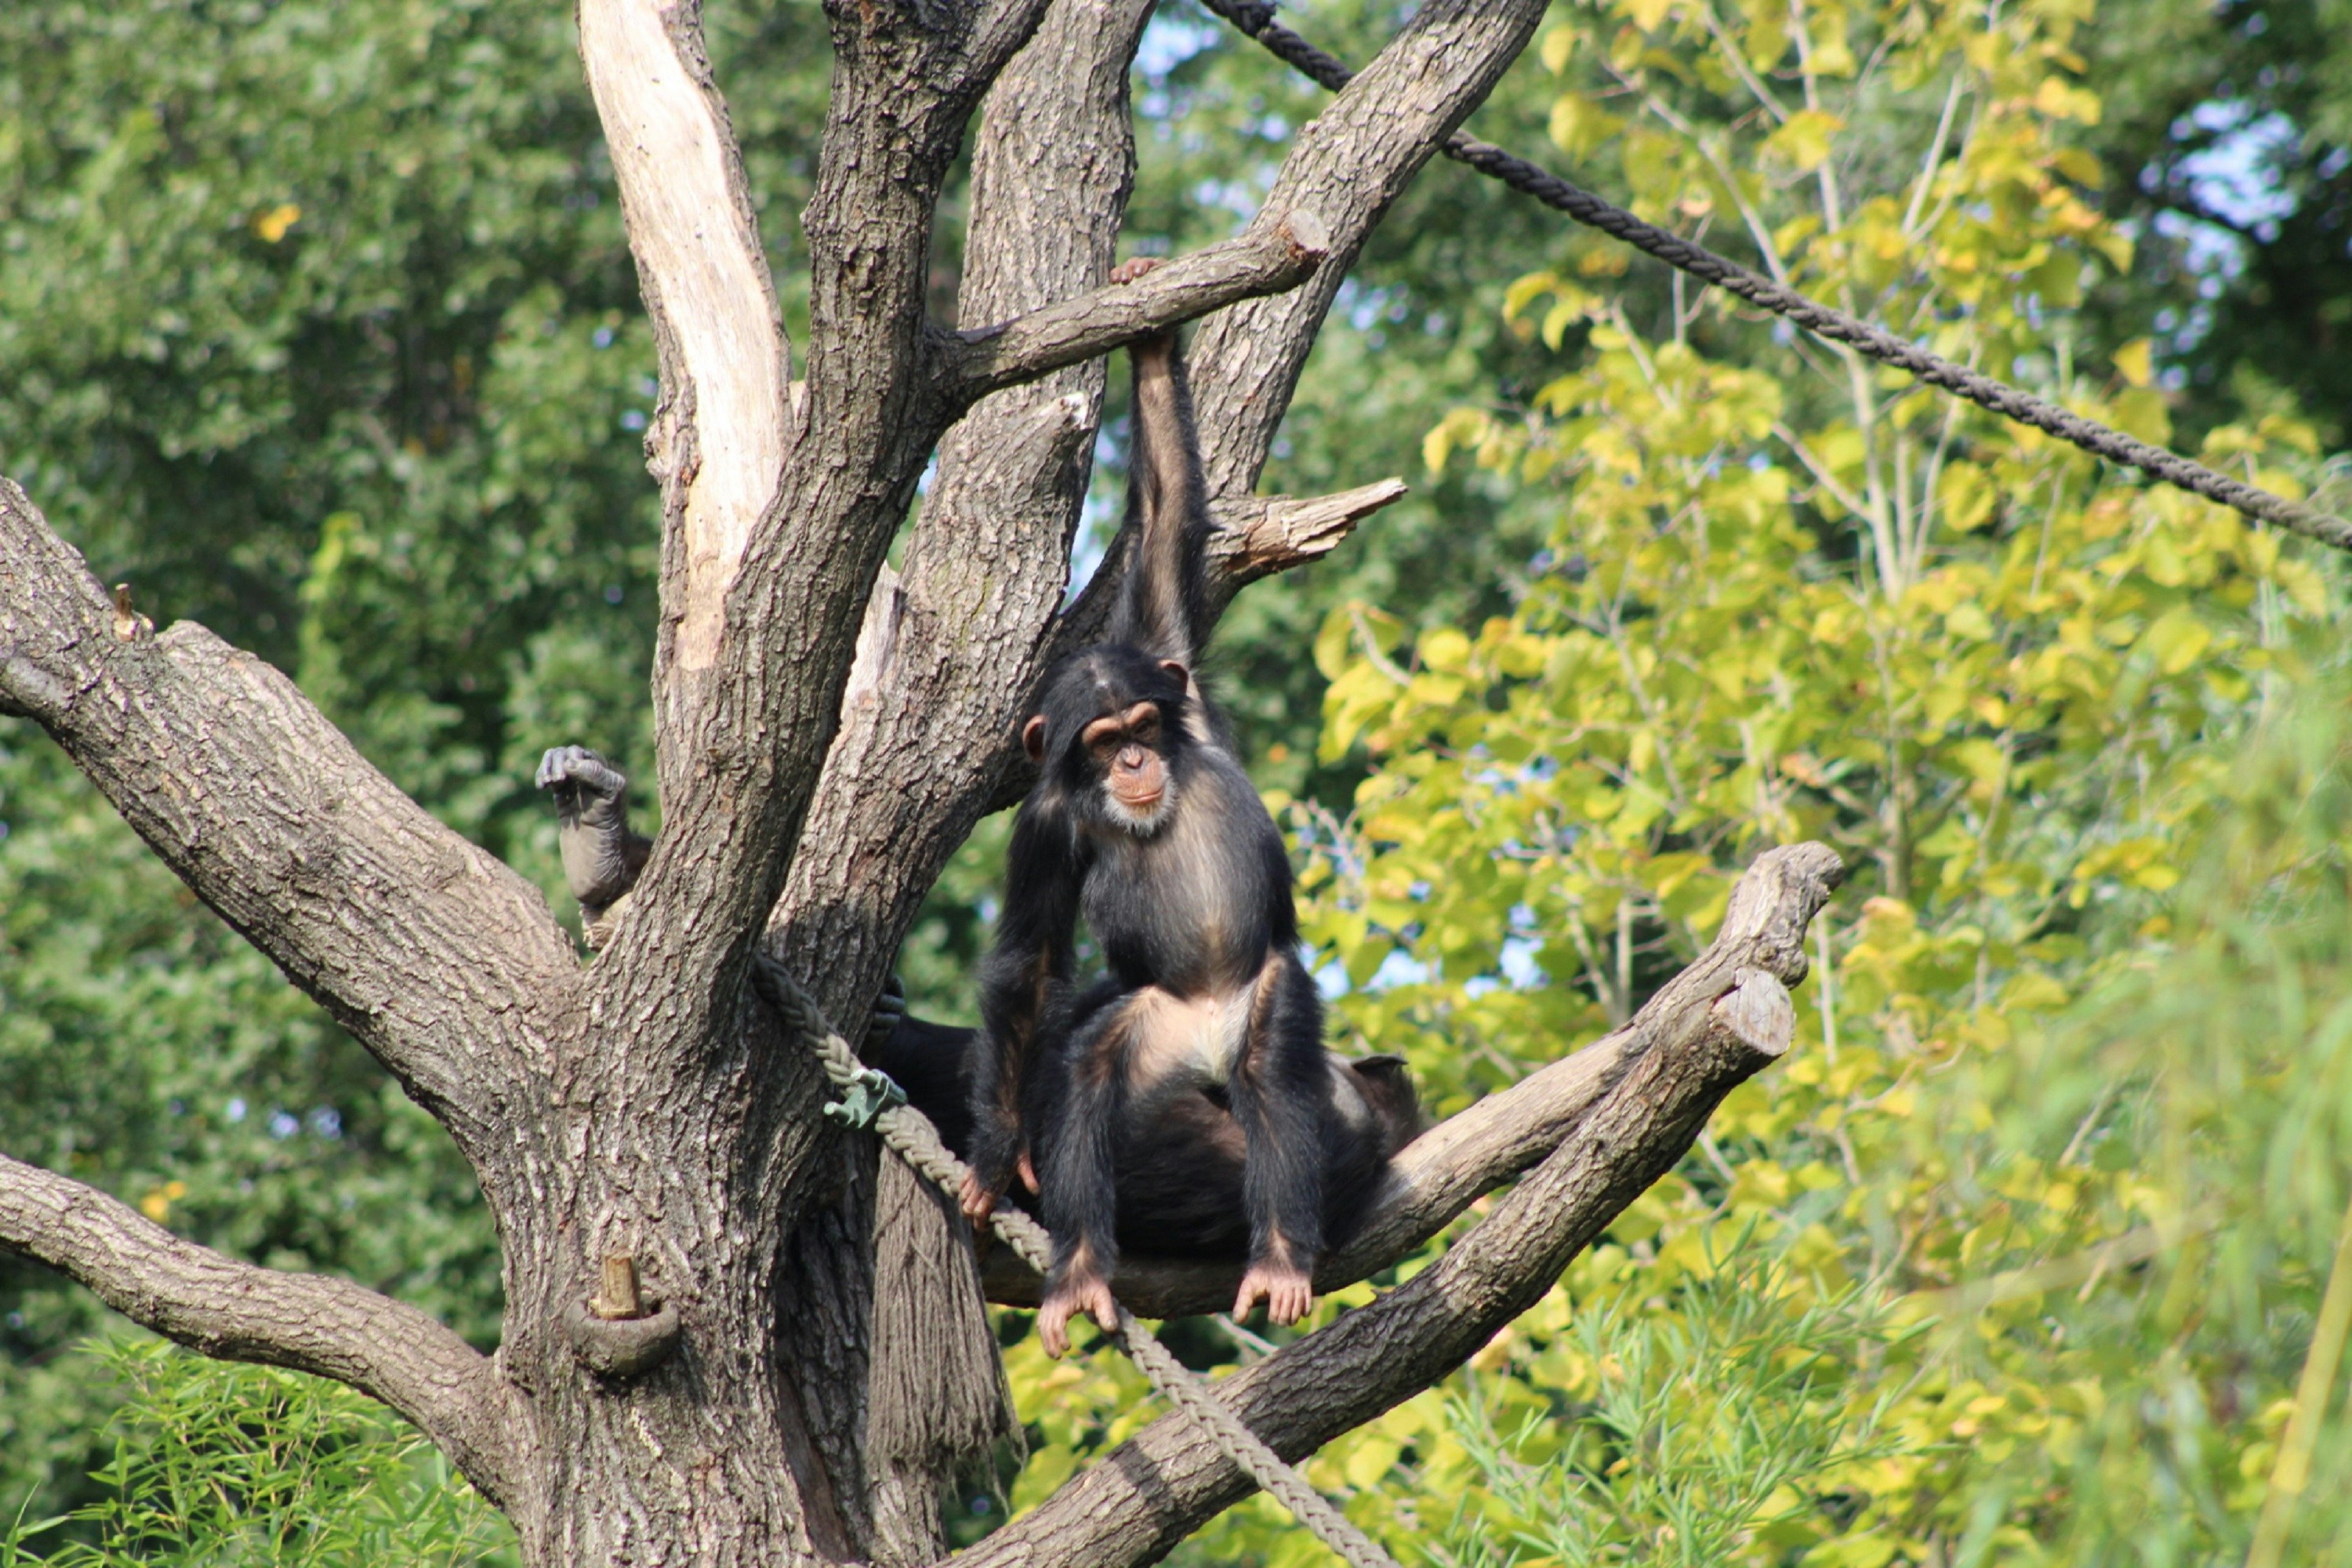 black monkey on brown tree branch during daytime